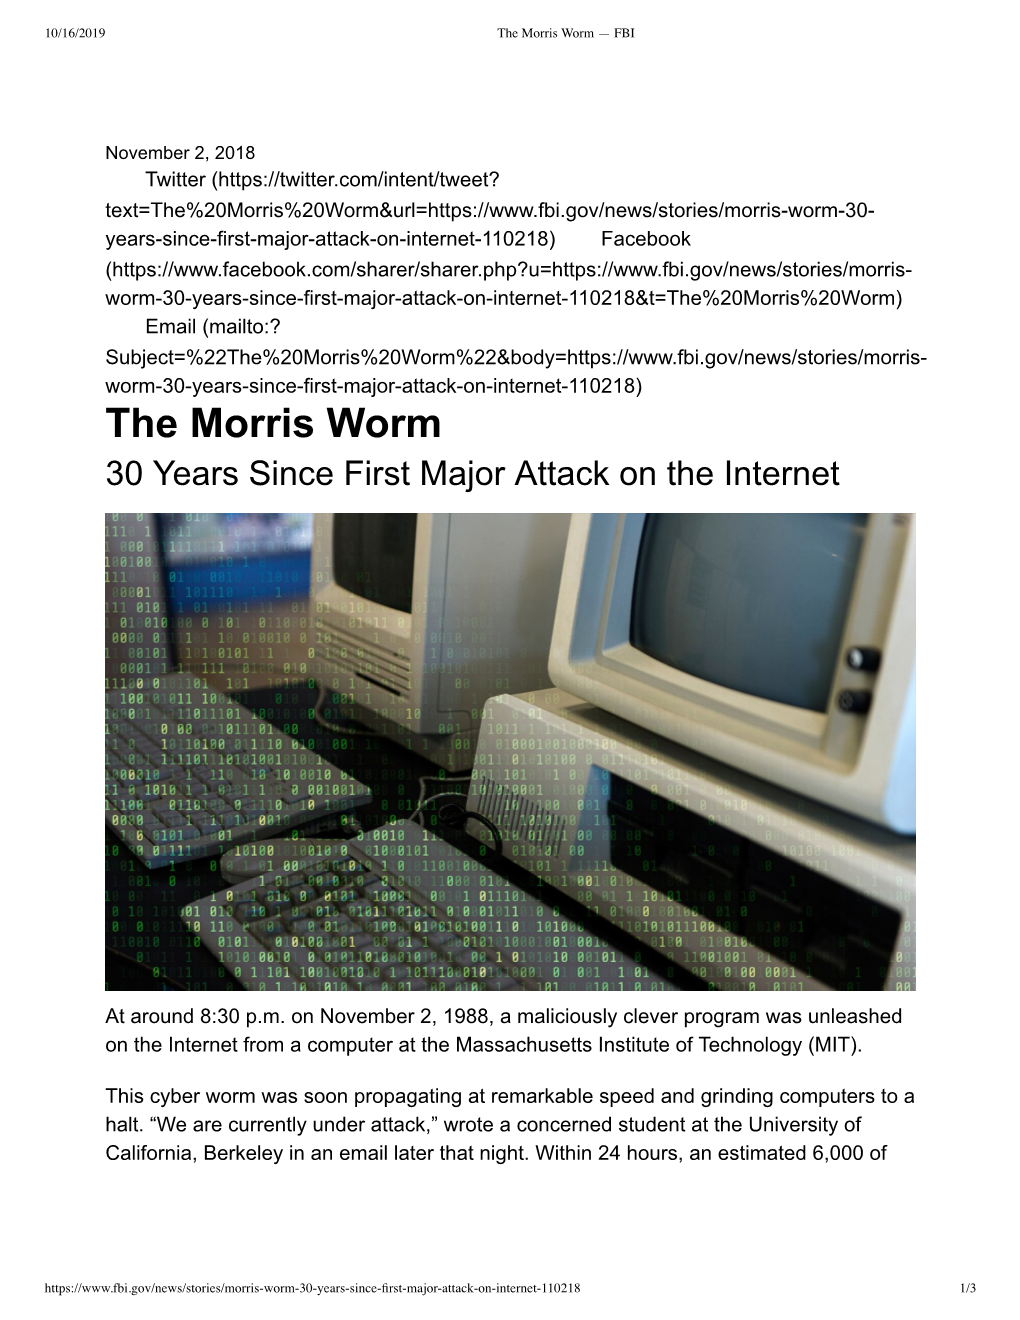 The Morris Worm — FBI